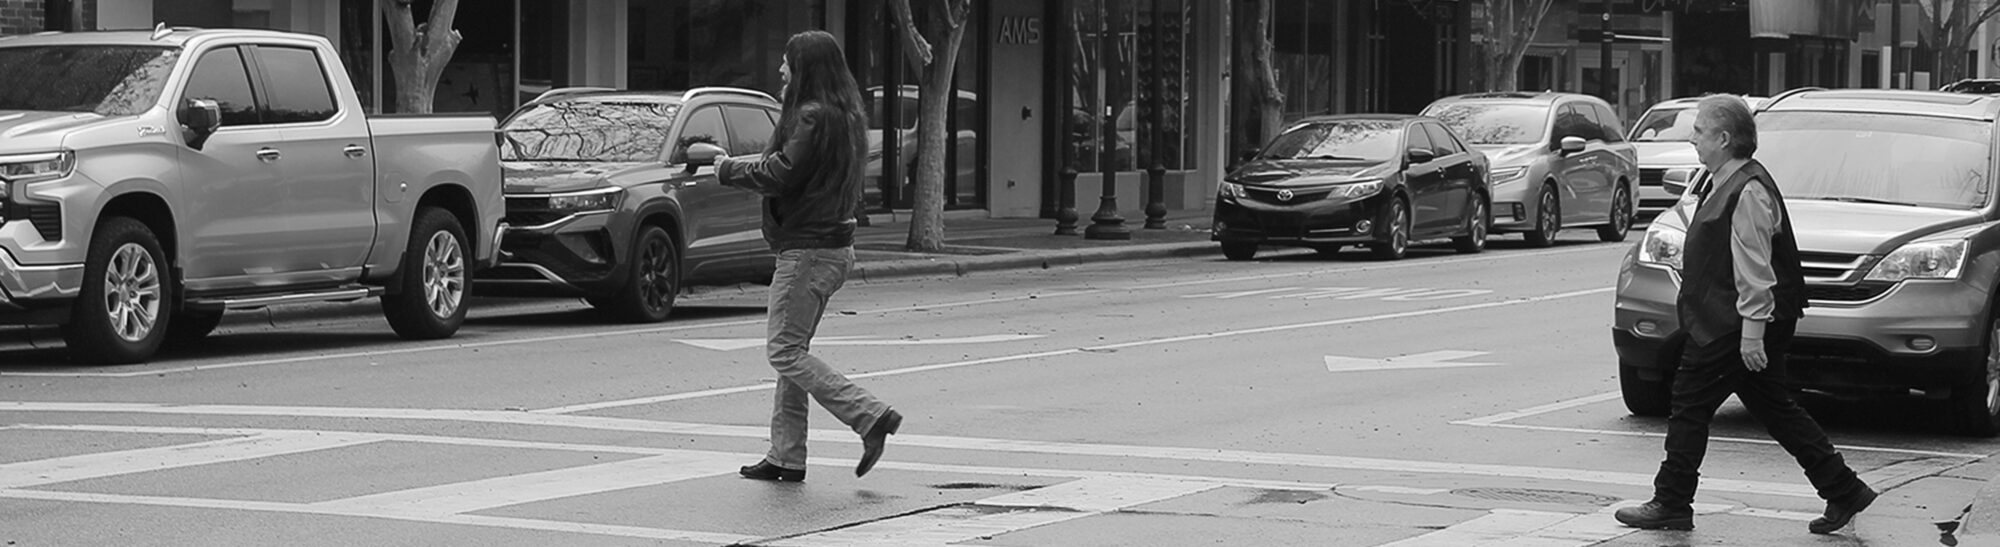 Robbie and Rich crossing a street in a crosswalk.